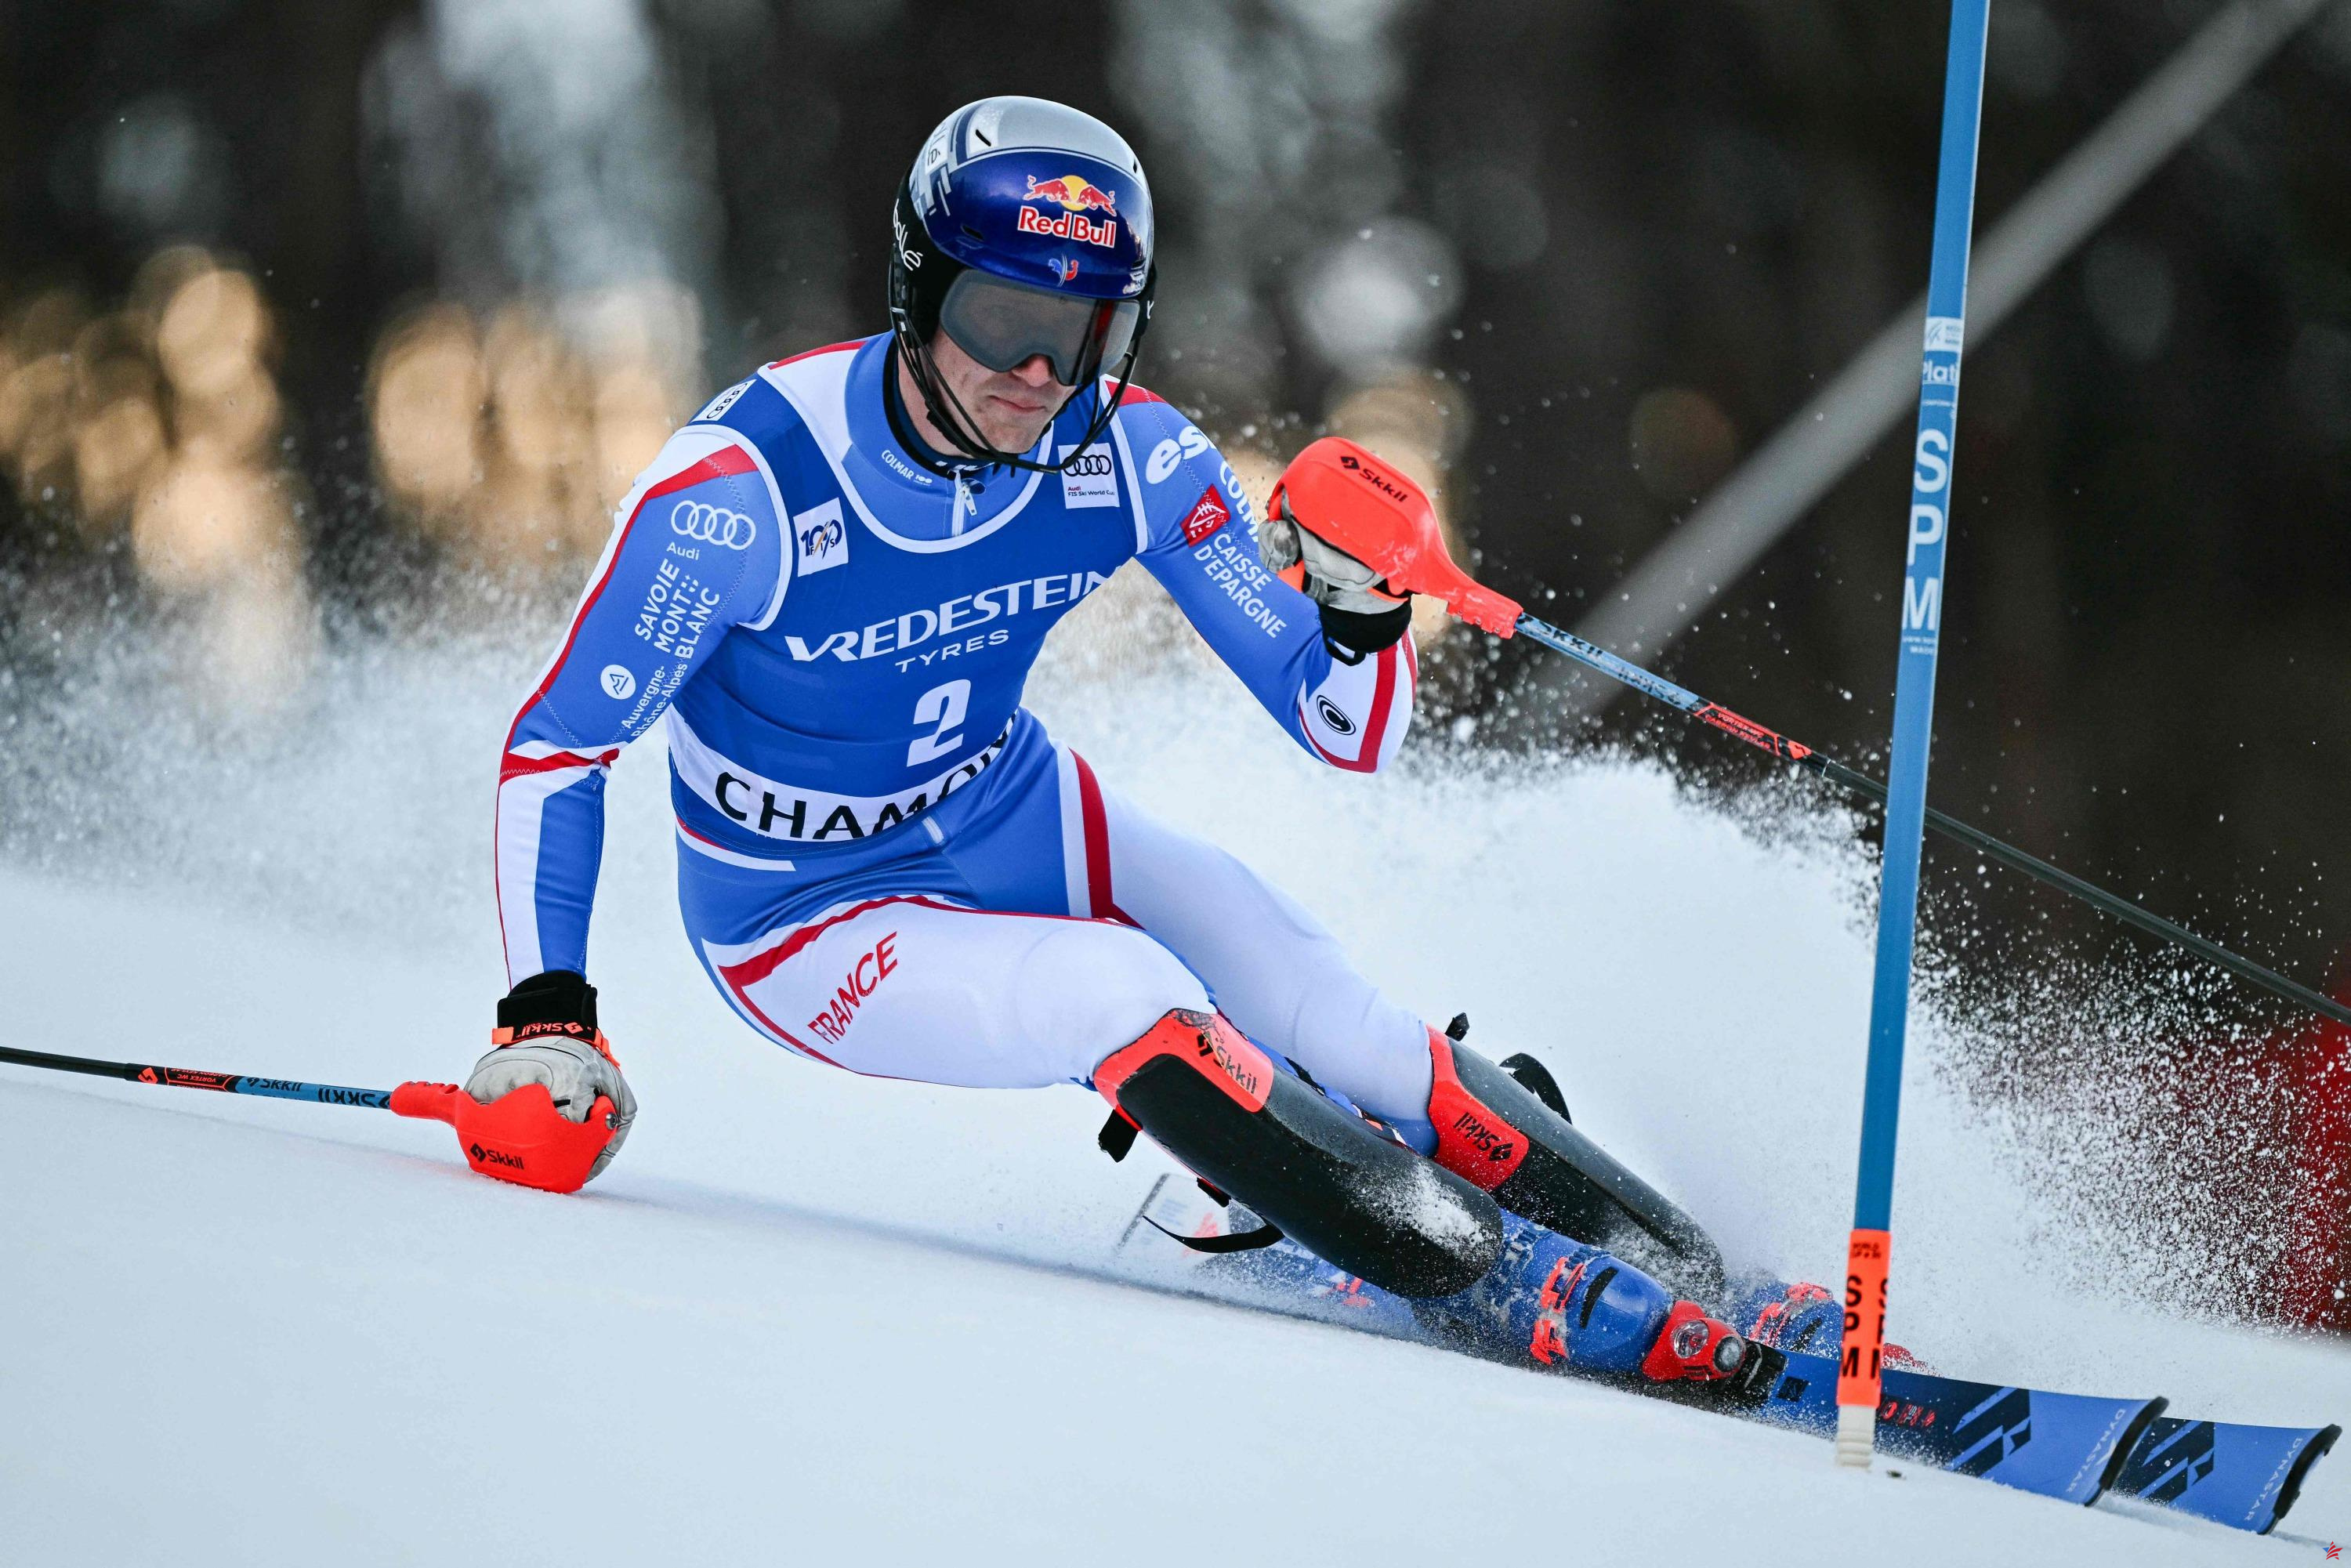 Esquí: decepción para Clément Noël, 3.º en el slalom de Chamonix